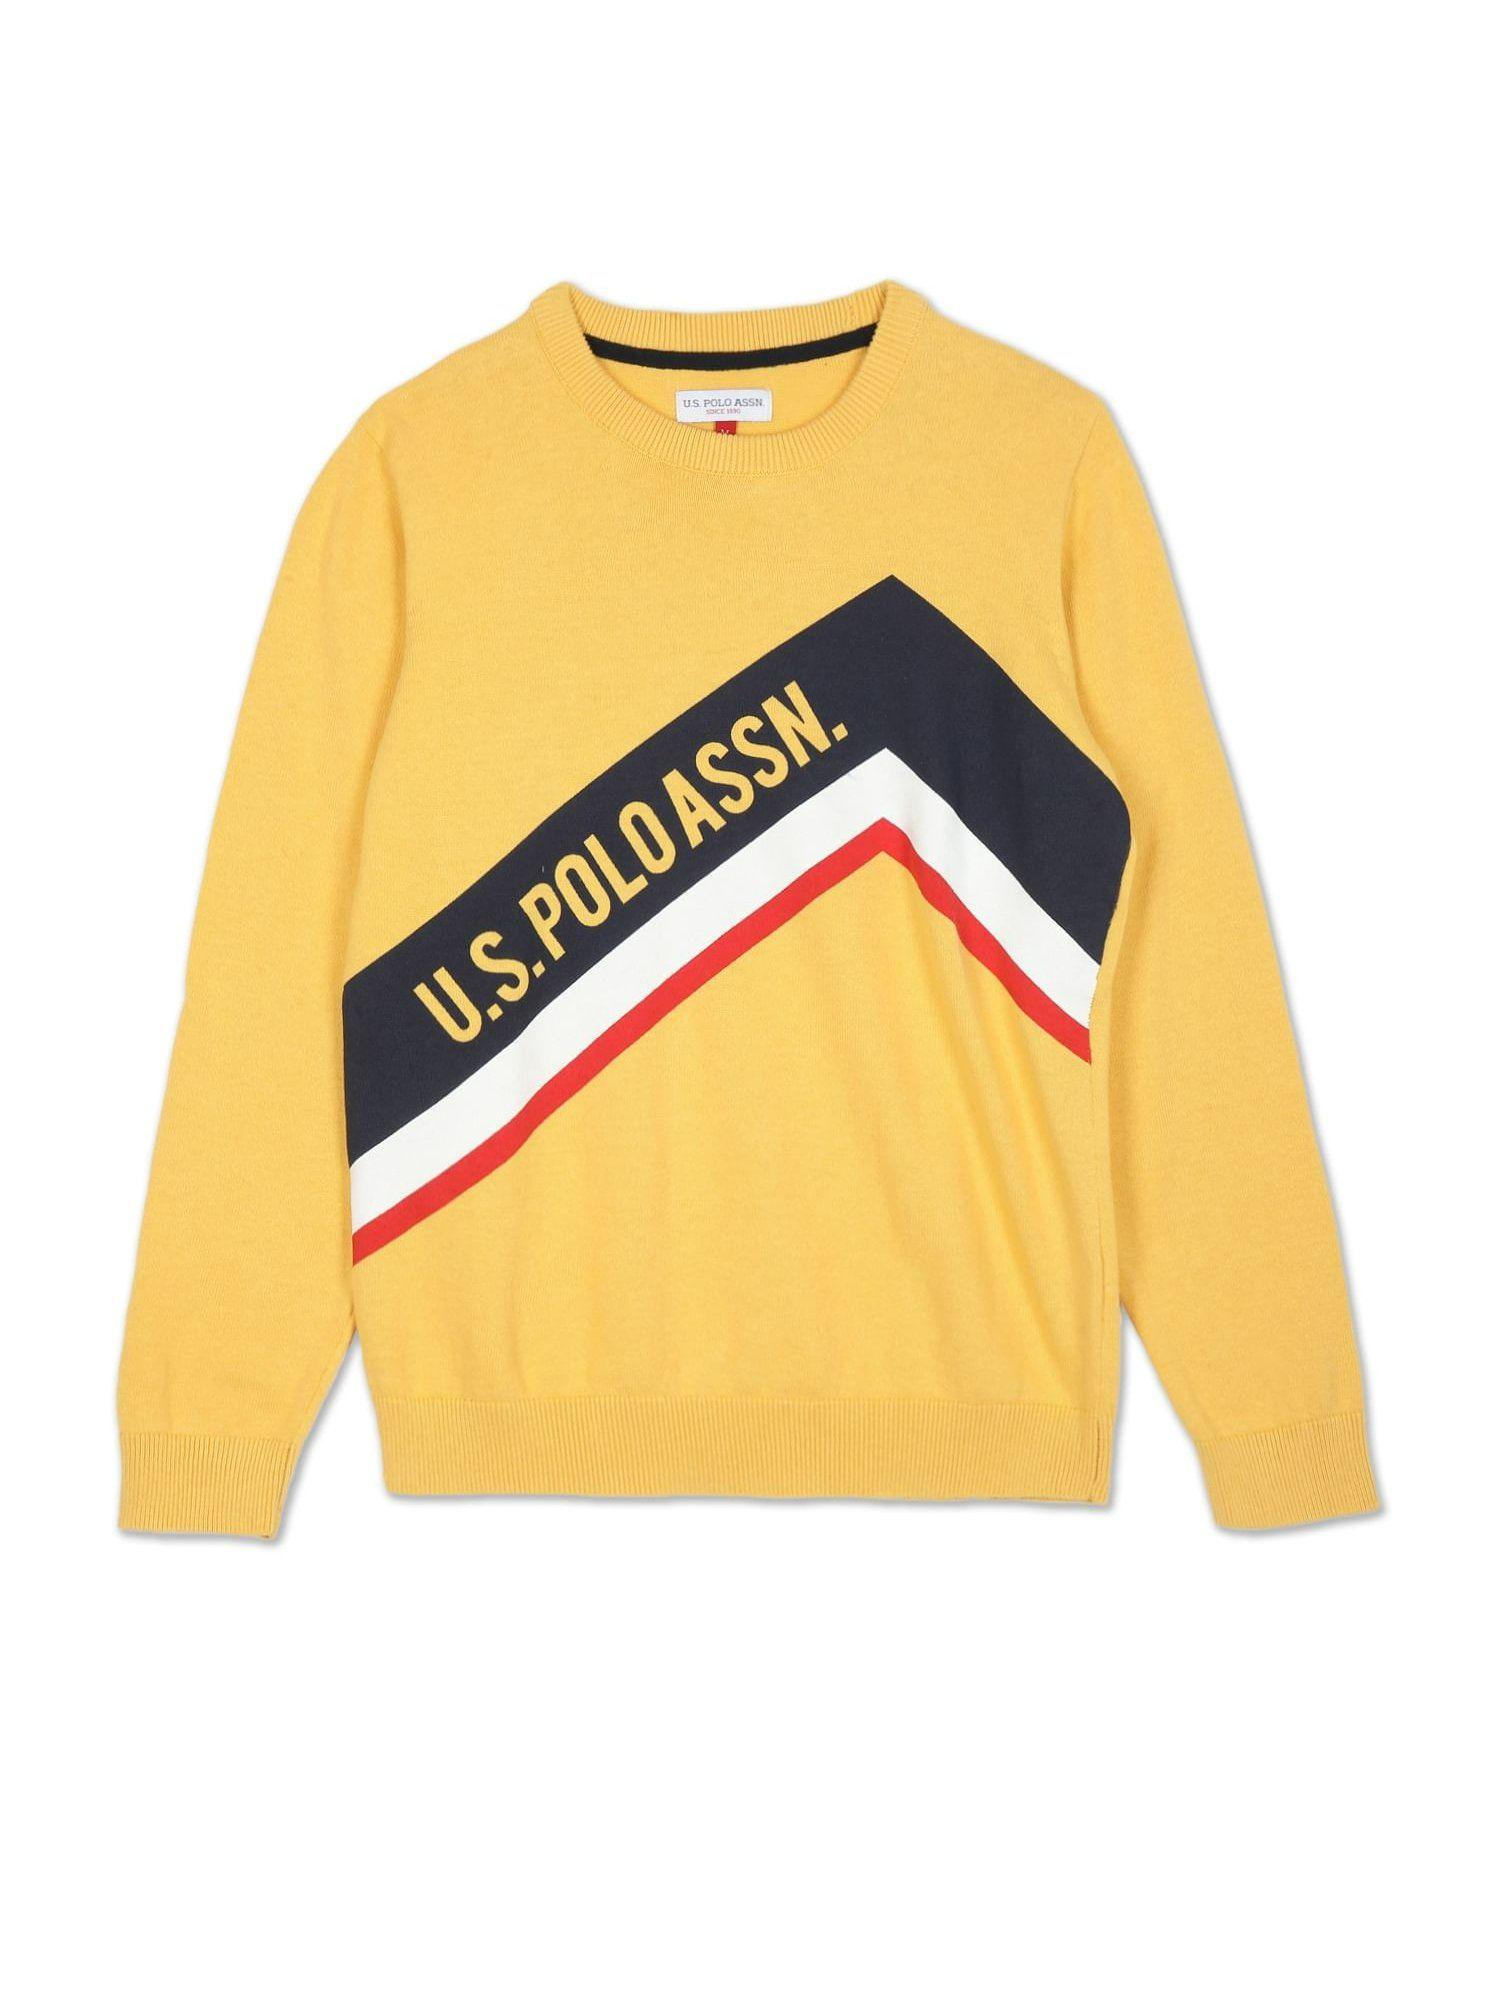 Boys Yellow Typography Print Cotton Sweater